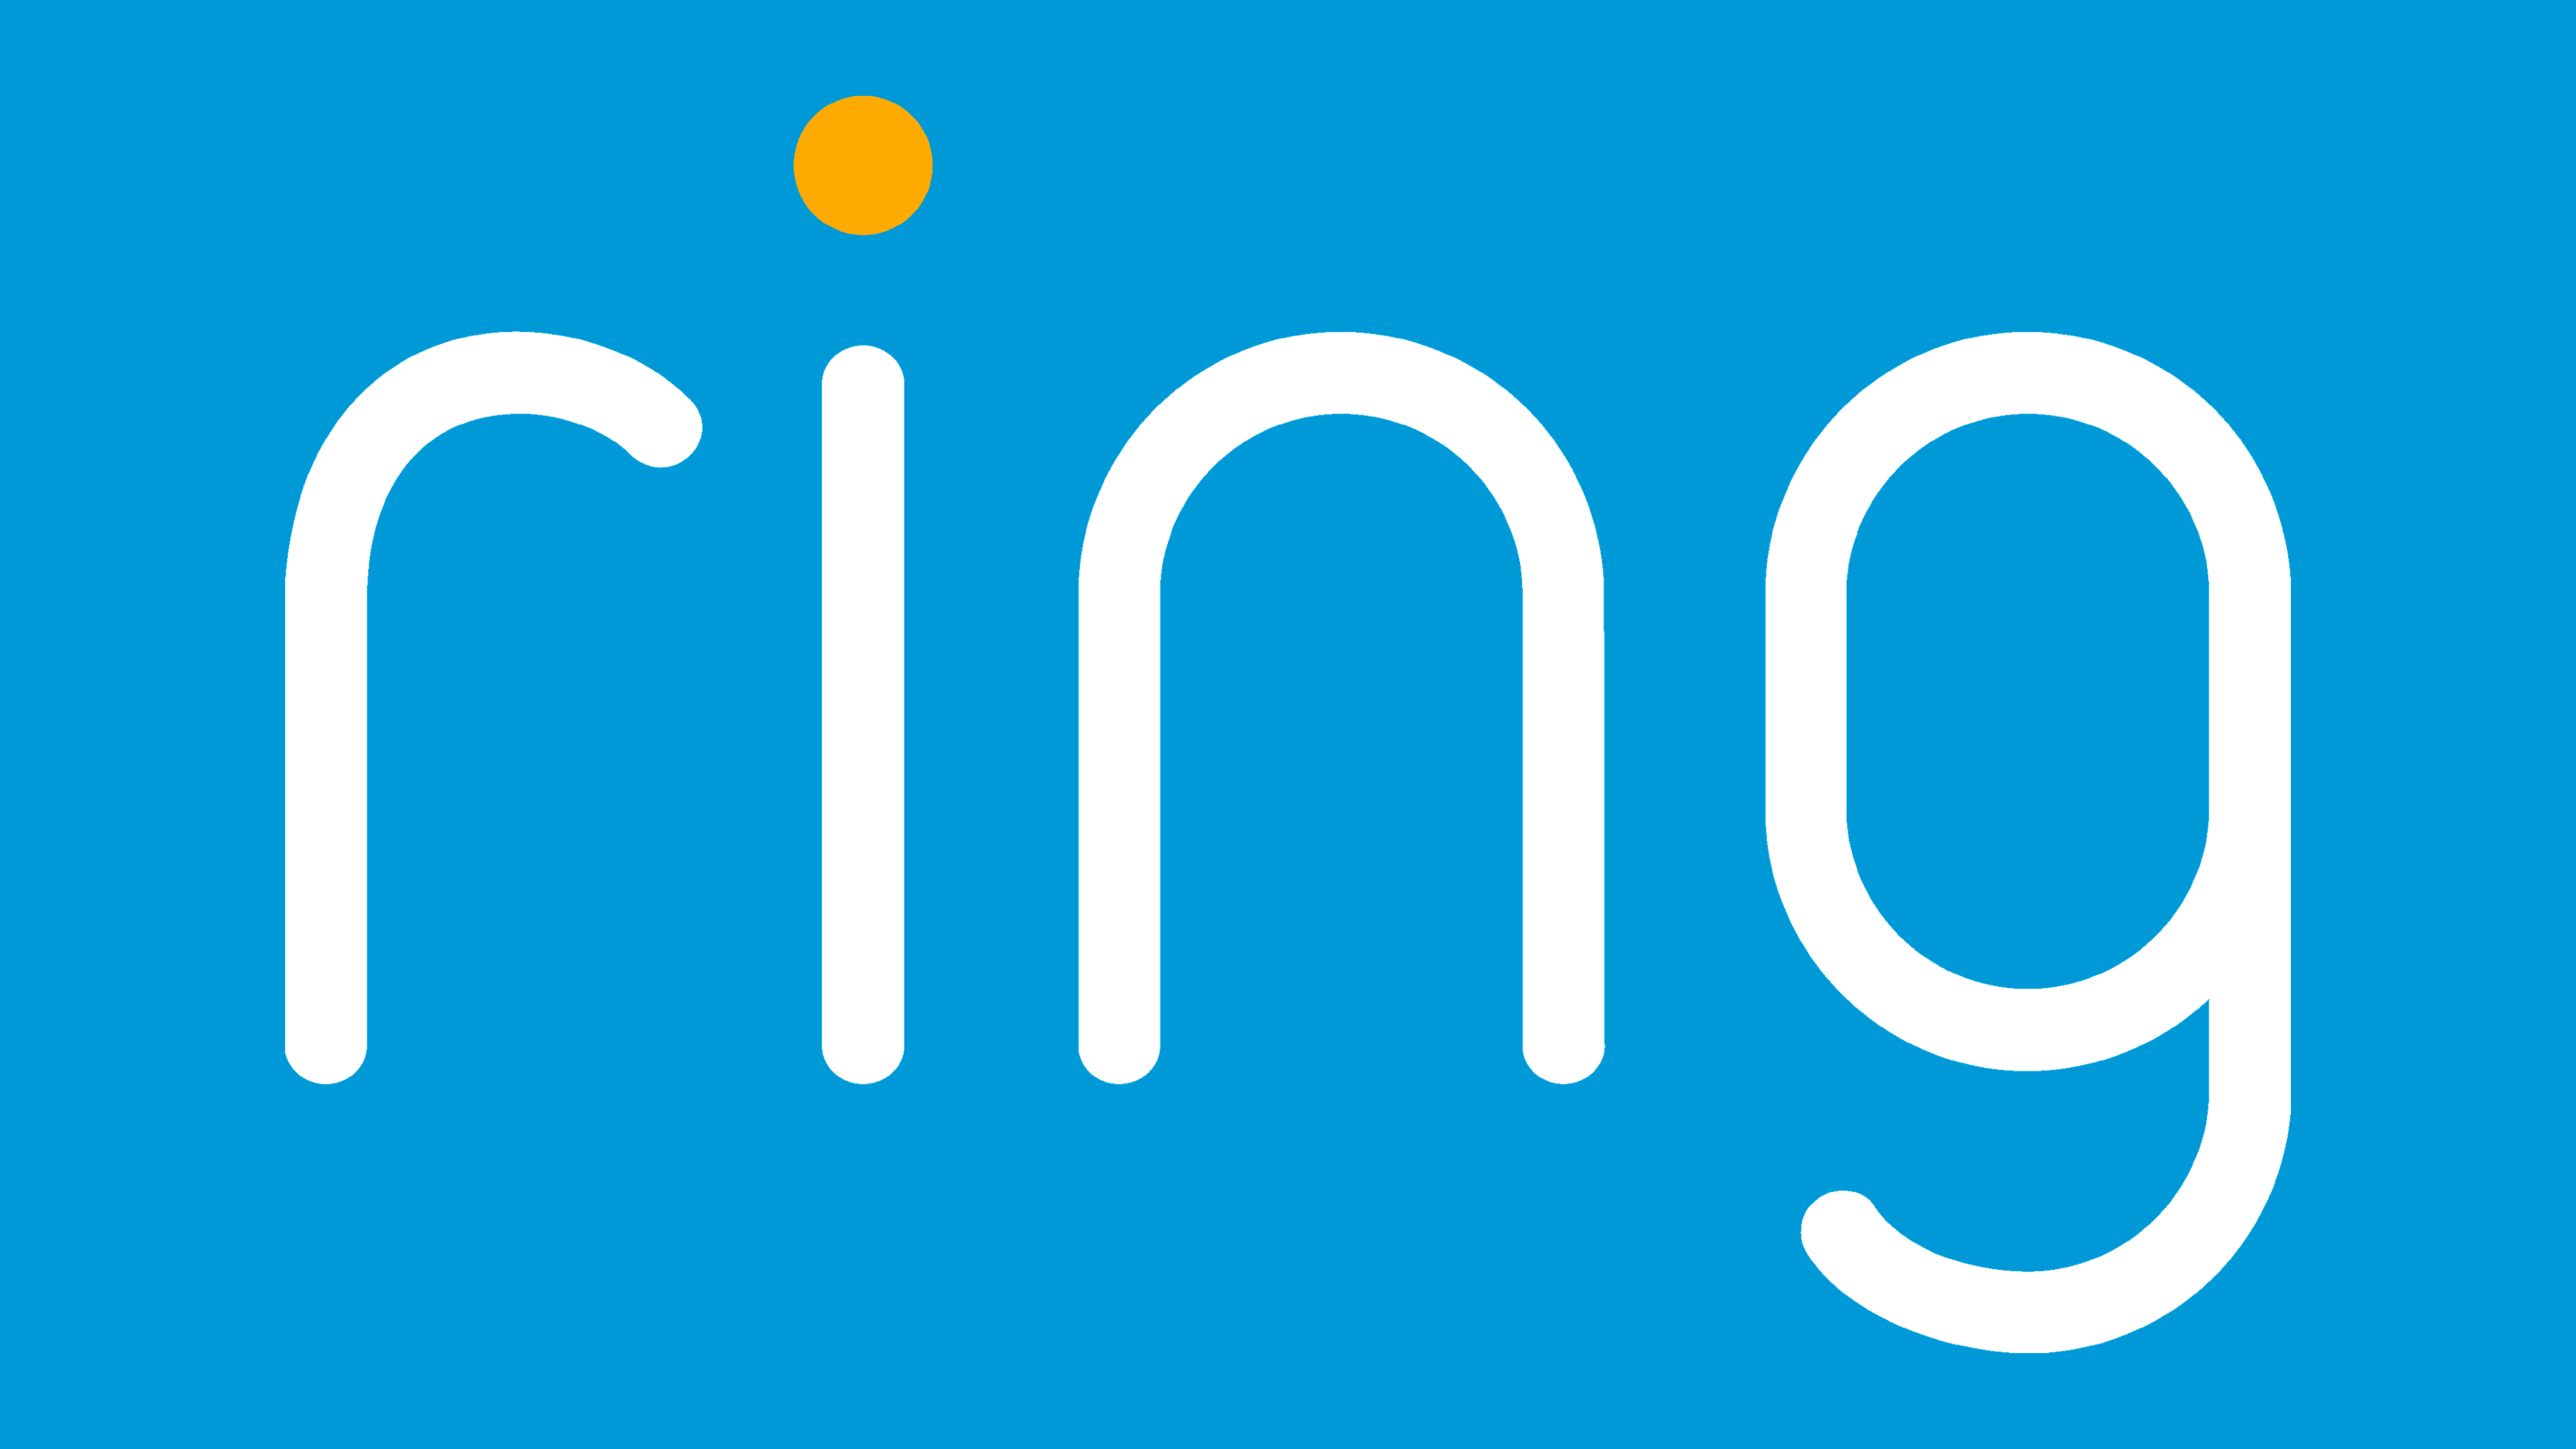 Saturn Ring Logo Transparent Background Free Download - PNG Images